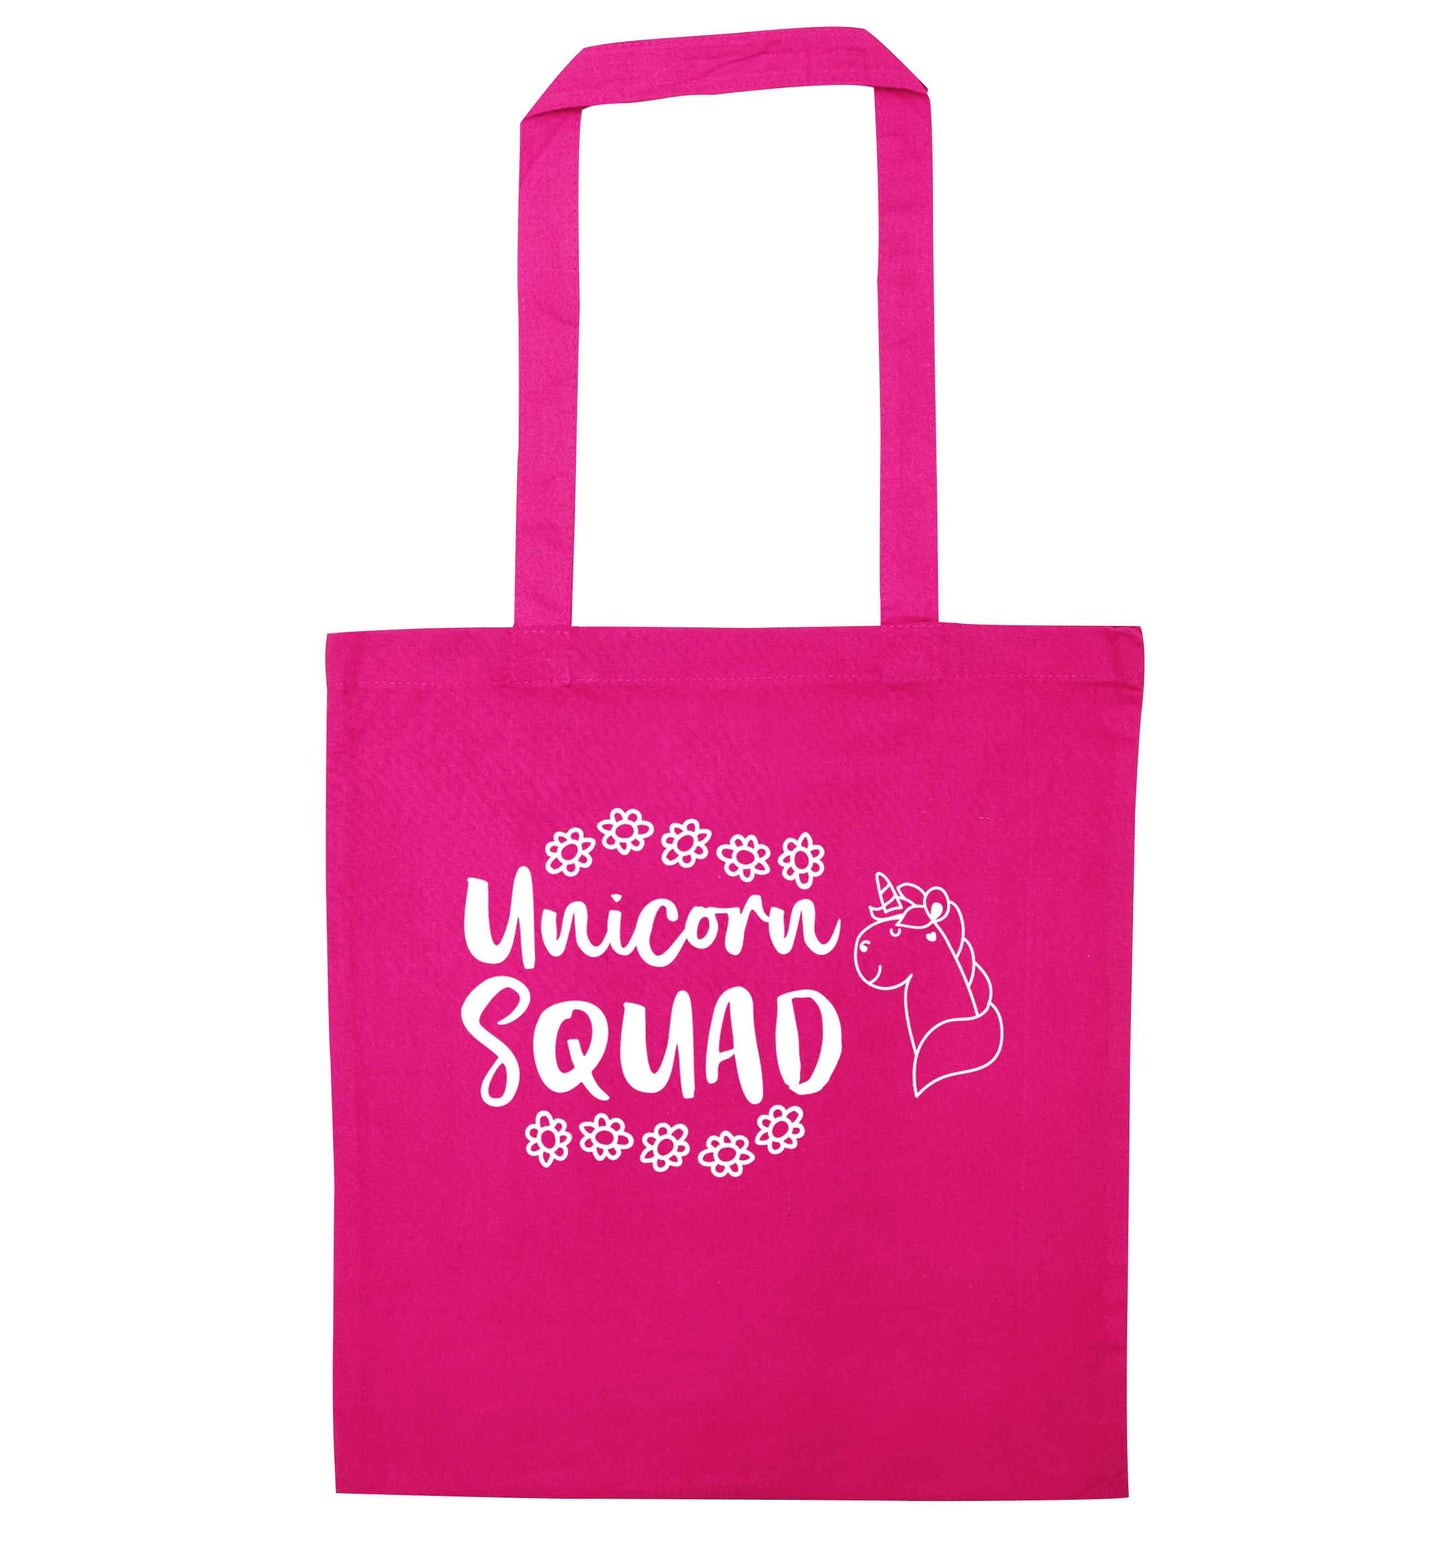 Unicorn Squad pink tote bag